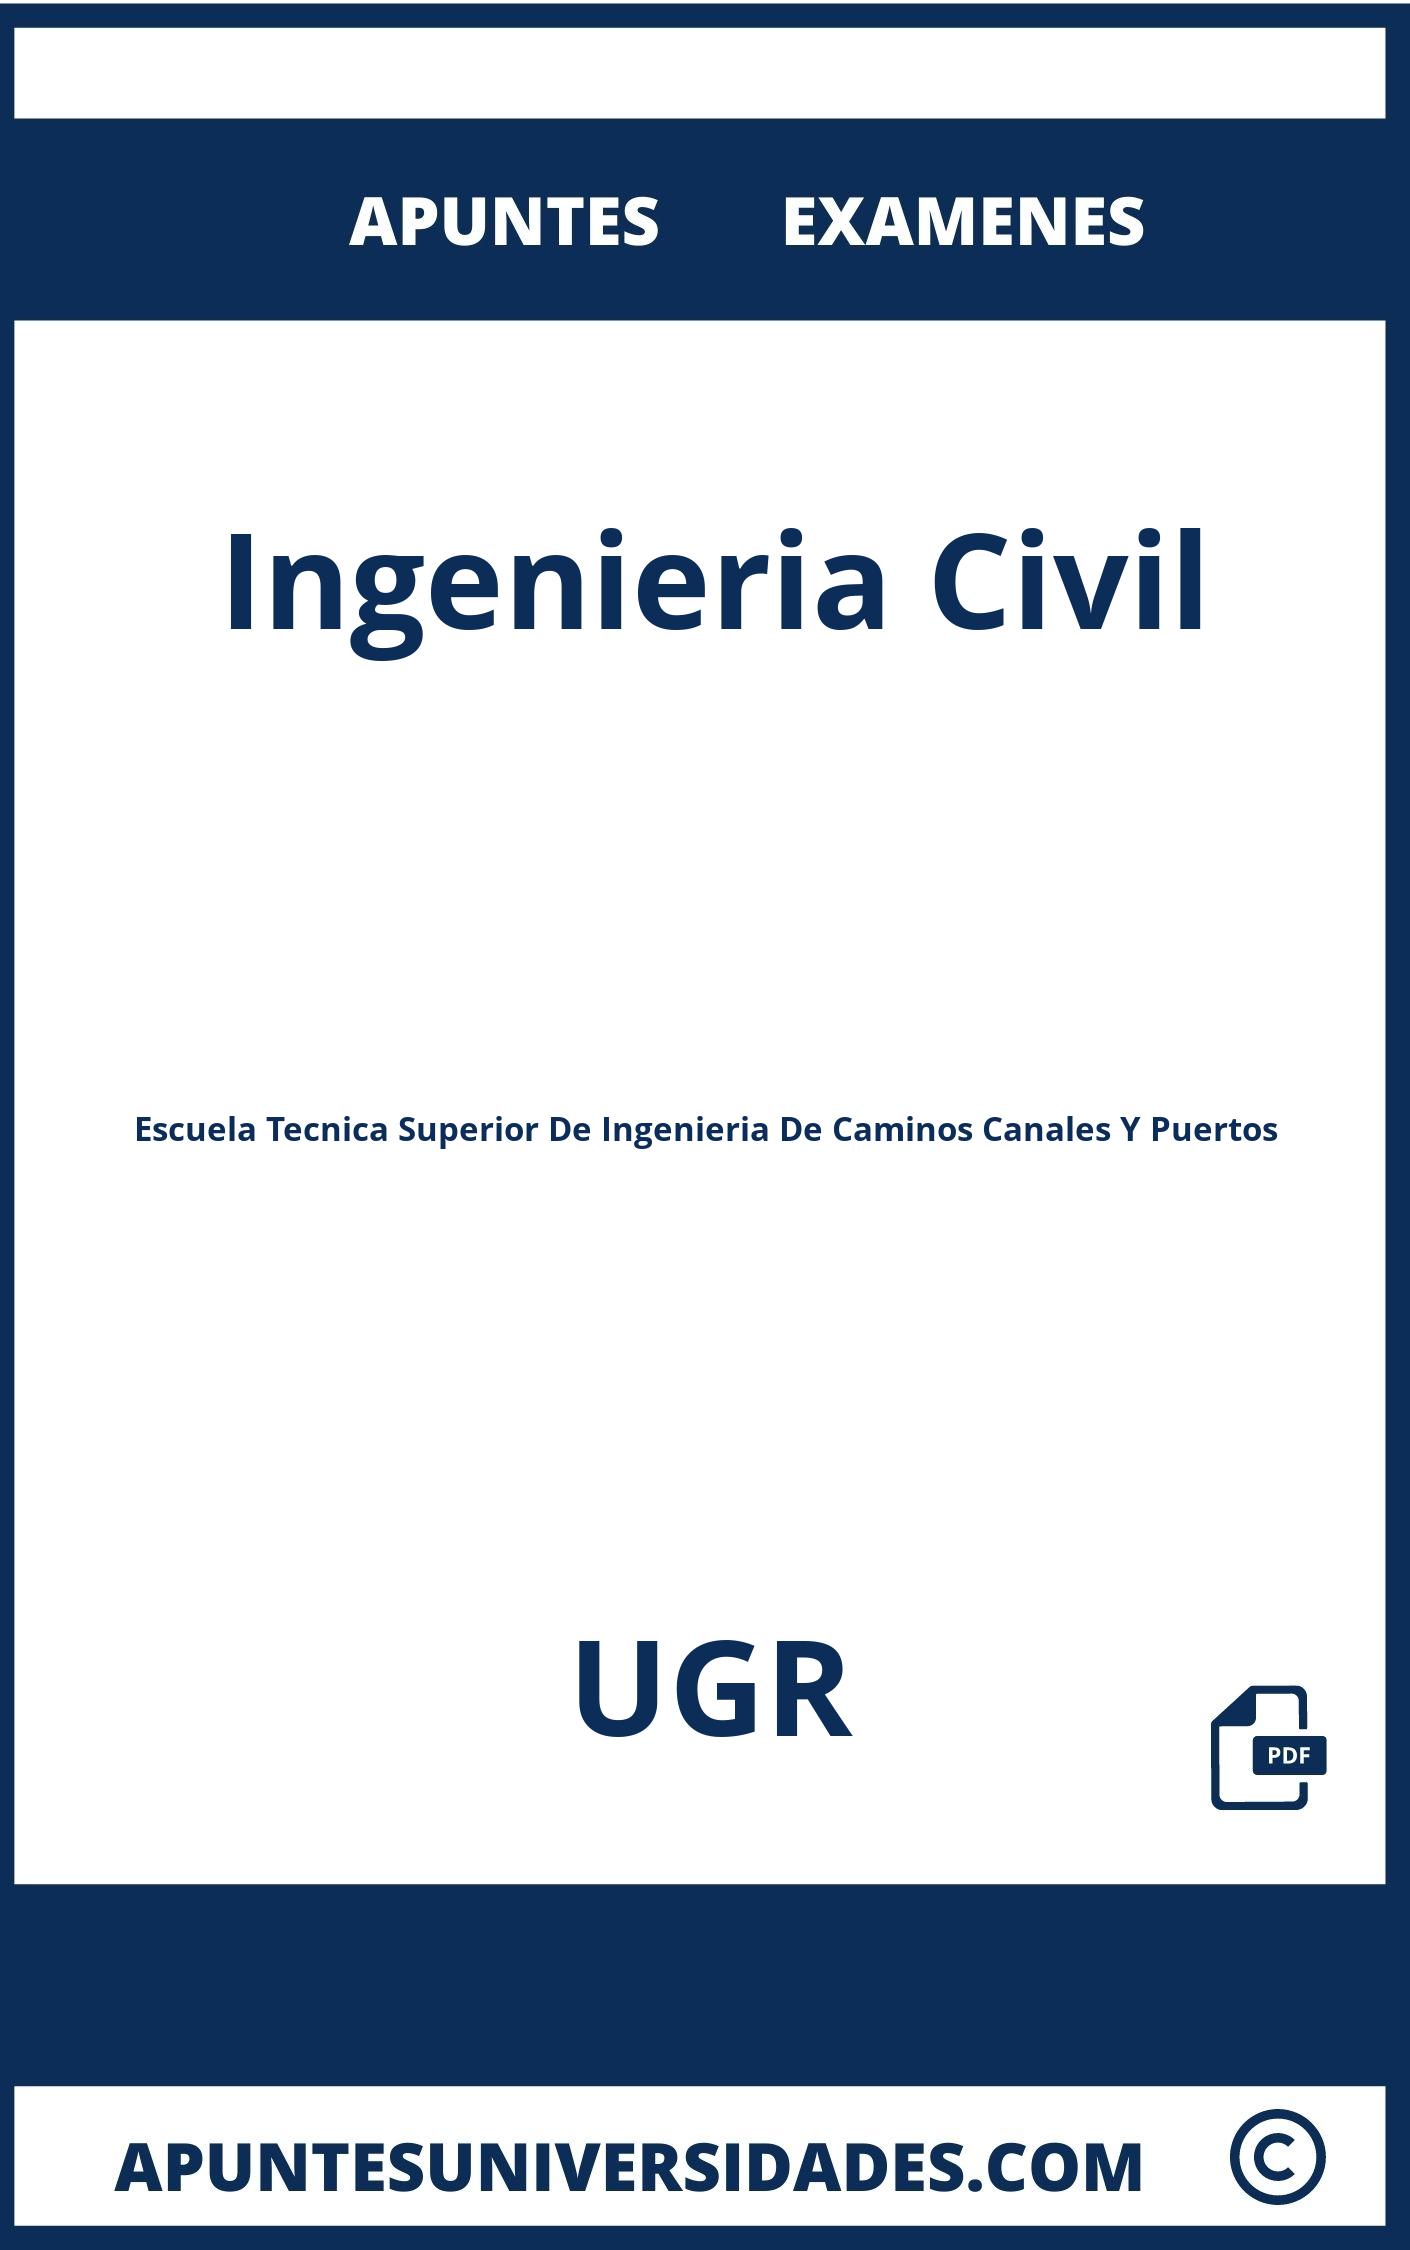 Apuntes y Examenes Ingenieria Civil UGR